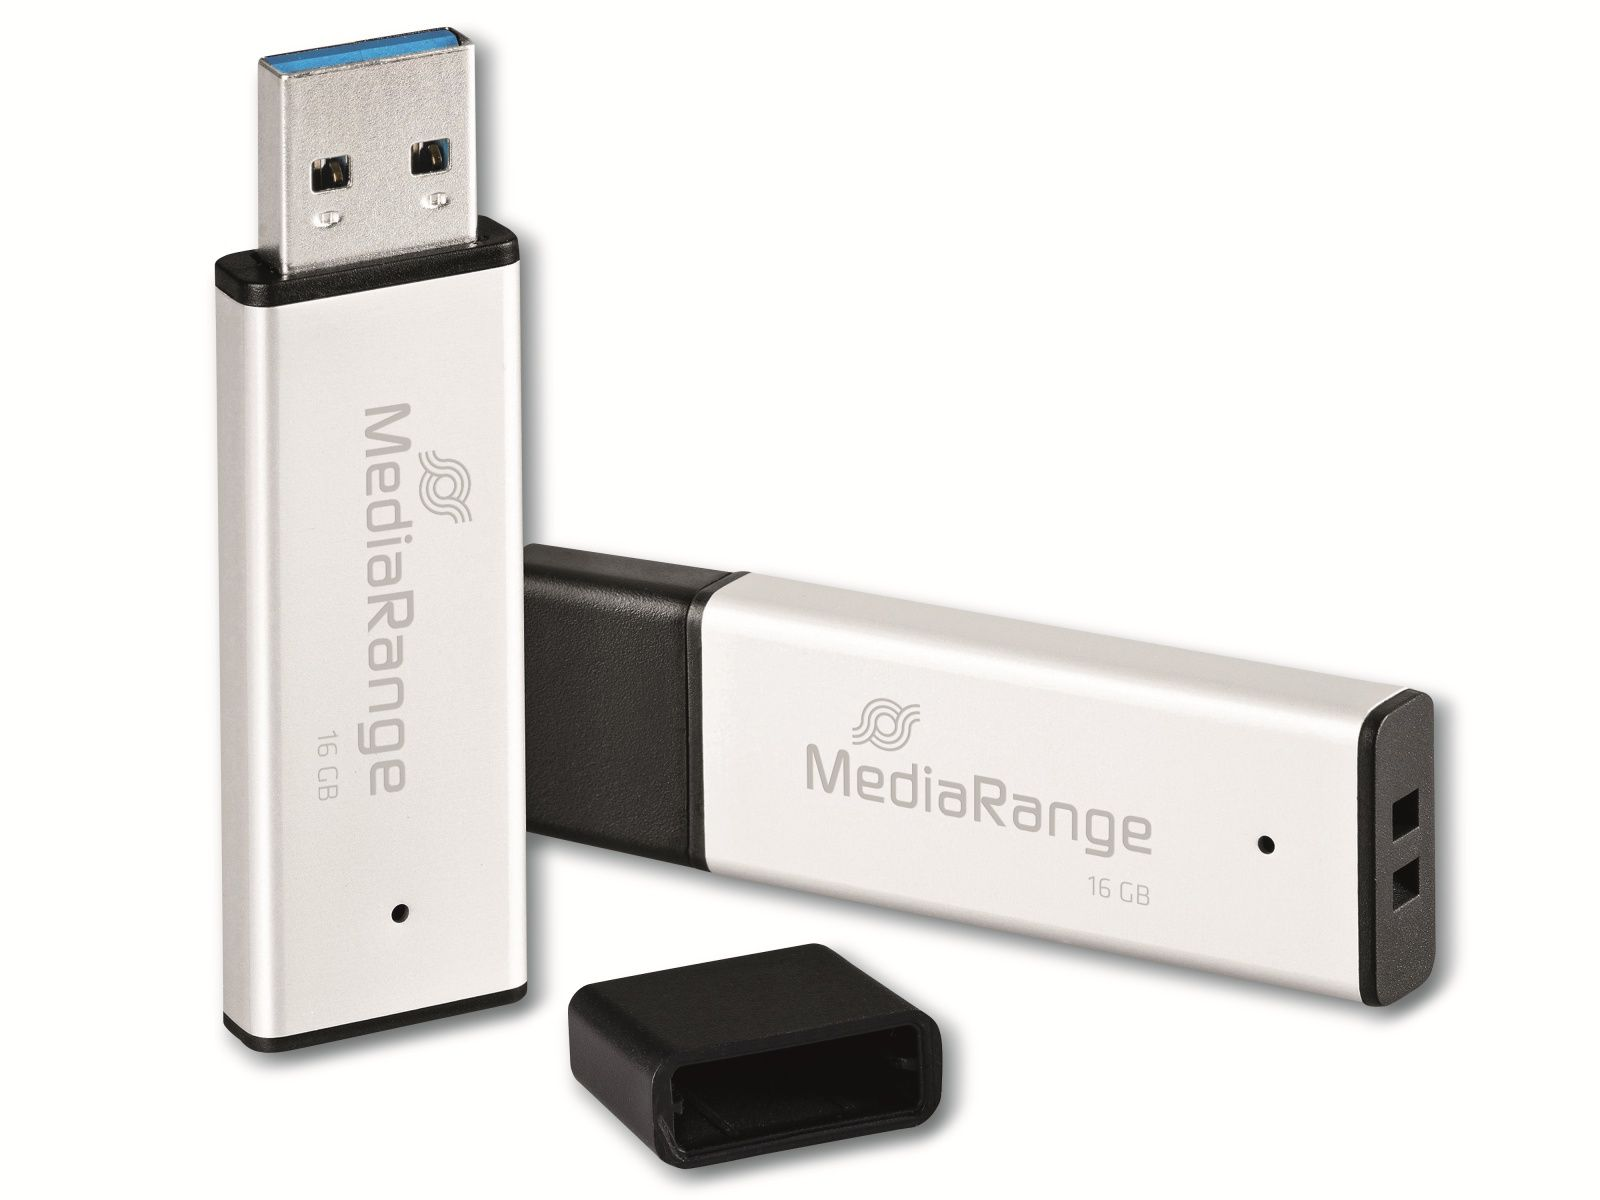 (schwarz/silber, 3.0, GB) GB 16 USB-Stick MEDIARANGE USB USB-Stick 16 MR1899,